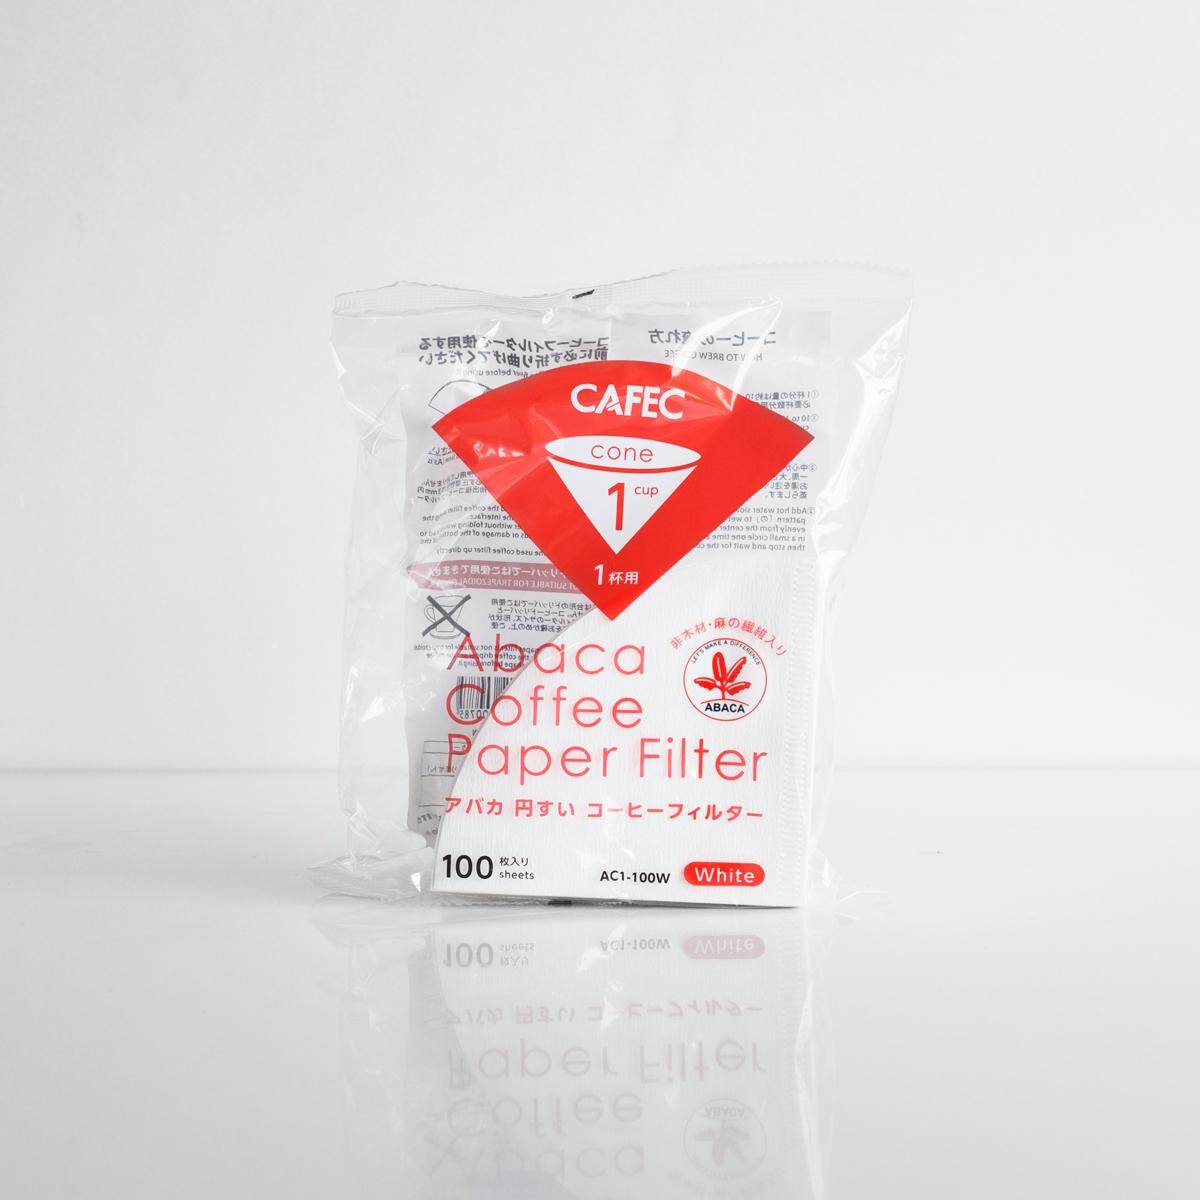 CAFEC Abaca Paper Filter 1 Cup [ Cone Shape ] กระดาษกรองกาแฟ CAFEC ผสมเส้นใย Abaca ขนาด 1 แก้ว ทรงกรวย